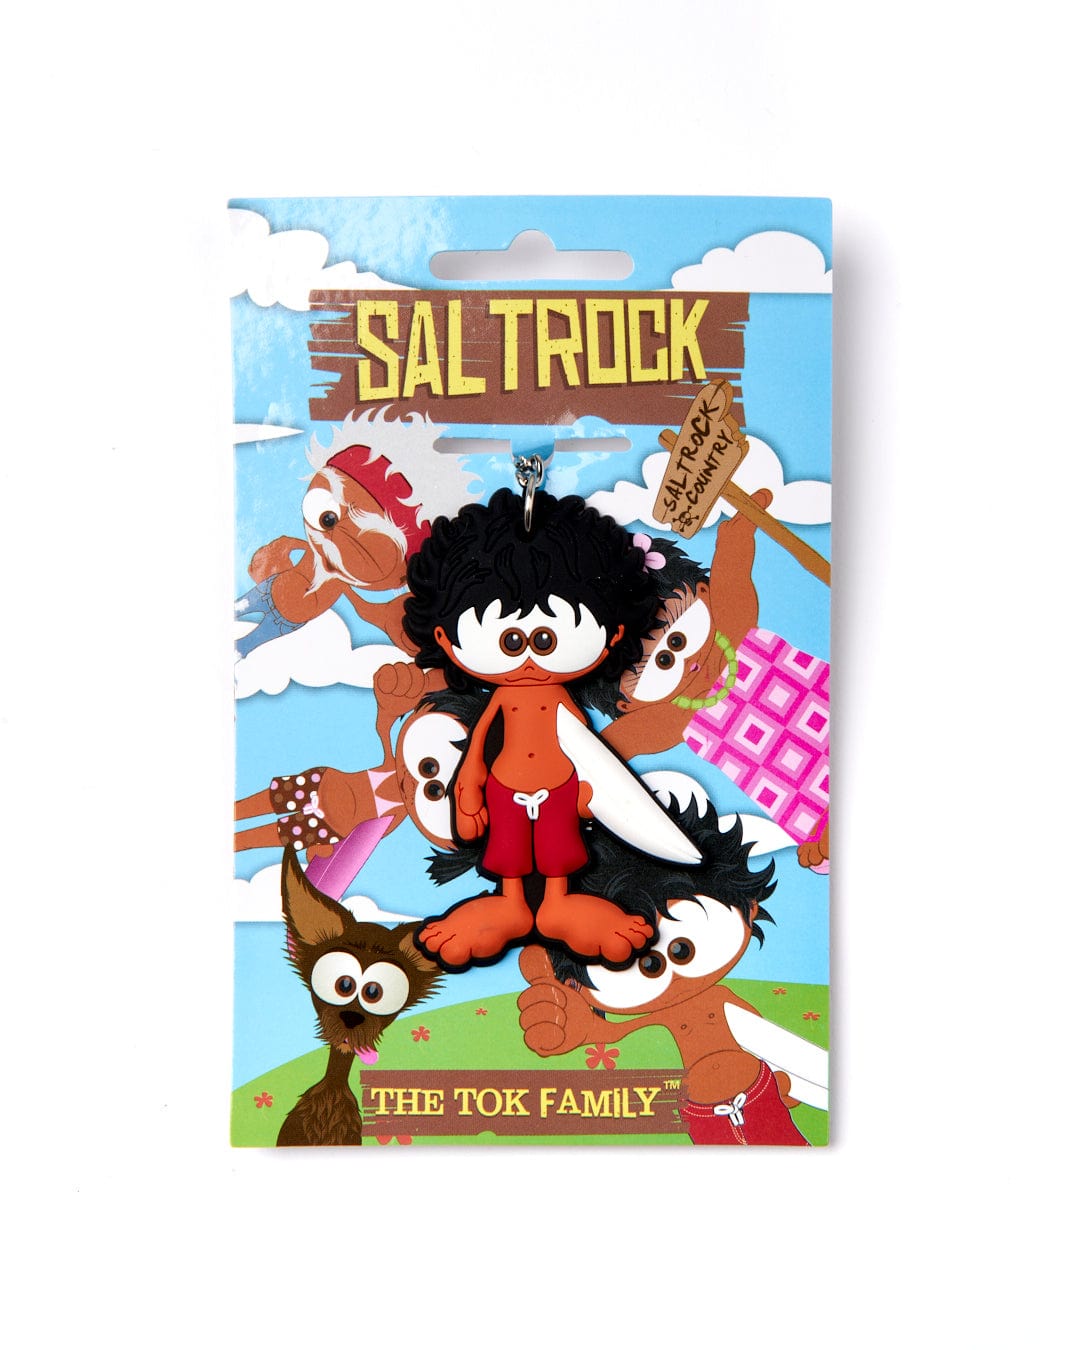 Introducing Tok Keyring - the Lok family enamel pin featuring the Saltrock mascot.